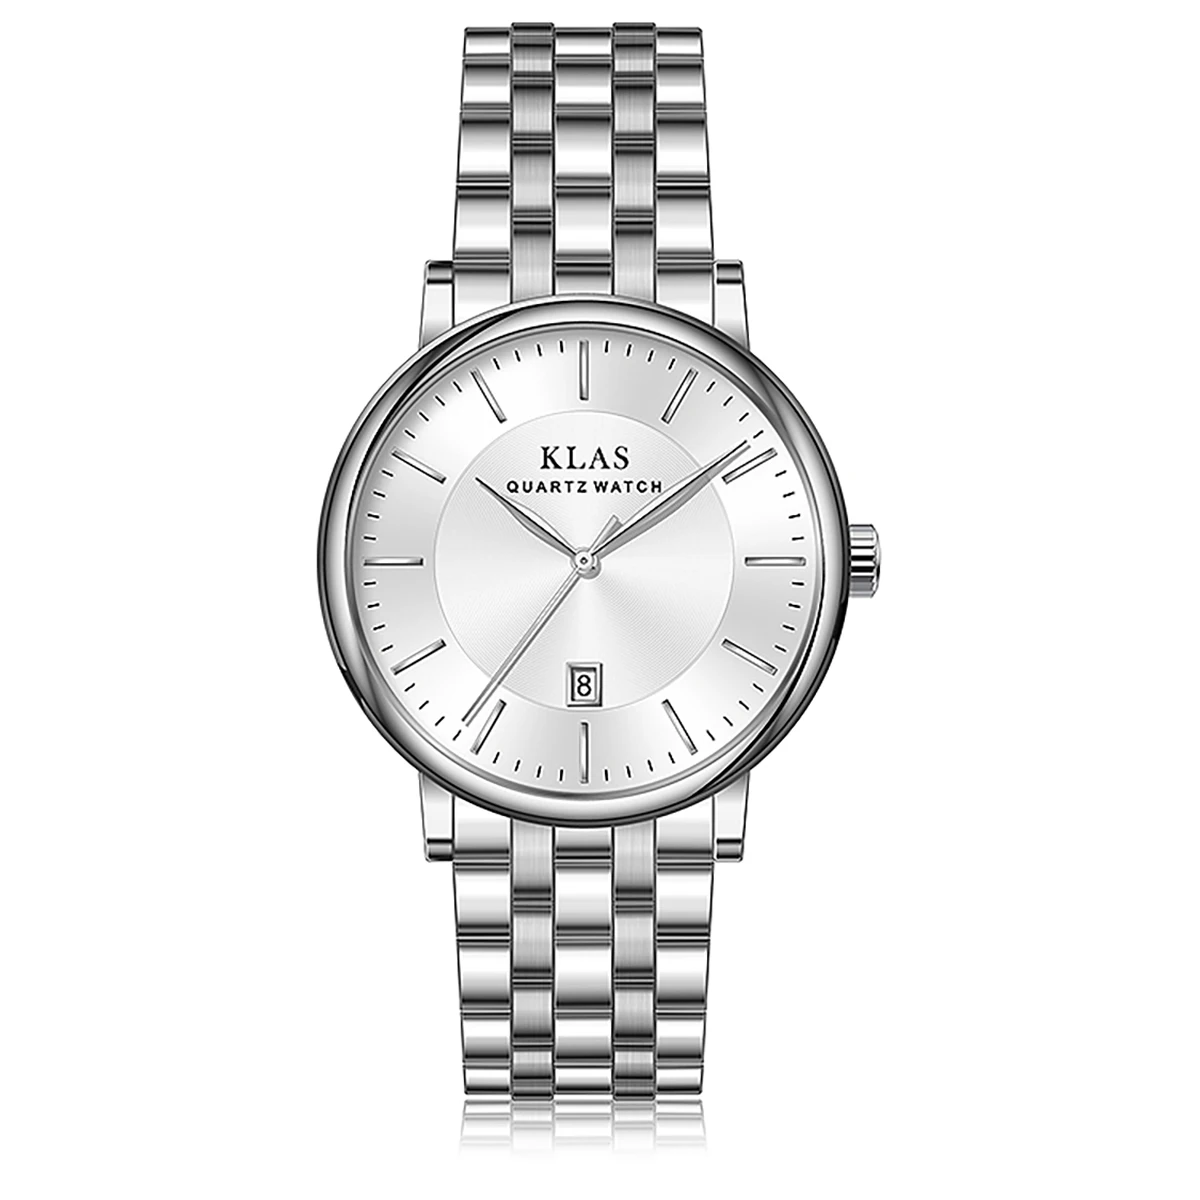 KLAS Men's Watch Quartz Stainless Watch 3ATM Waterproof Top Brand Casual Business Watch